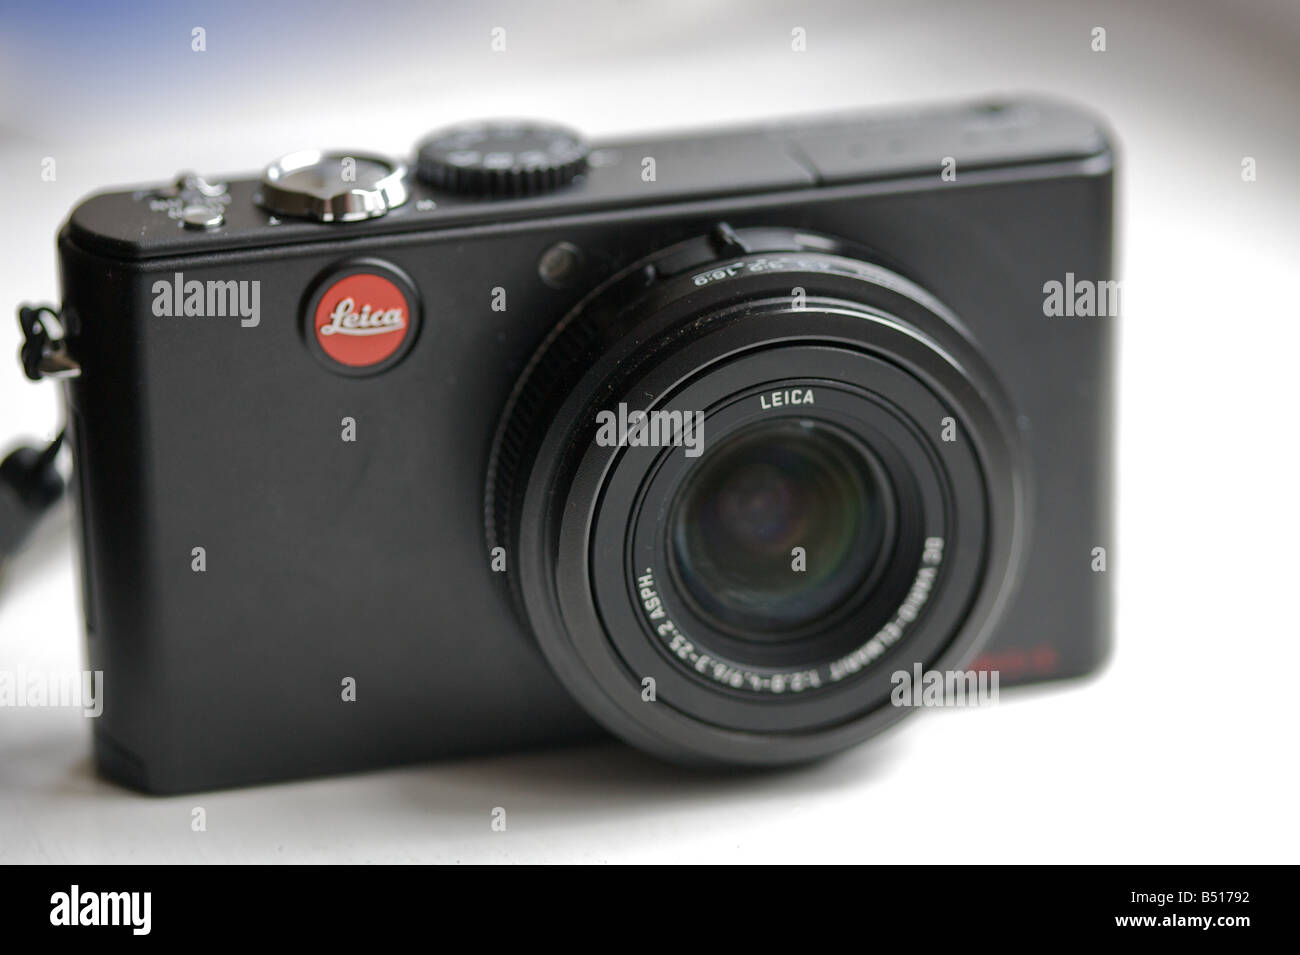 Leica D-LUX 3 camera Stock Photo - Alamy